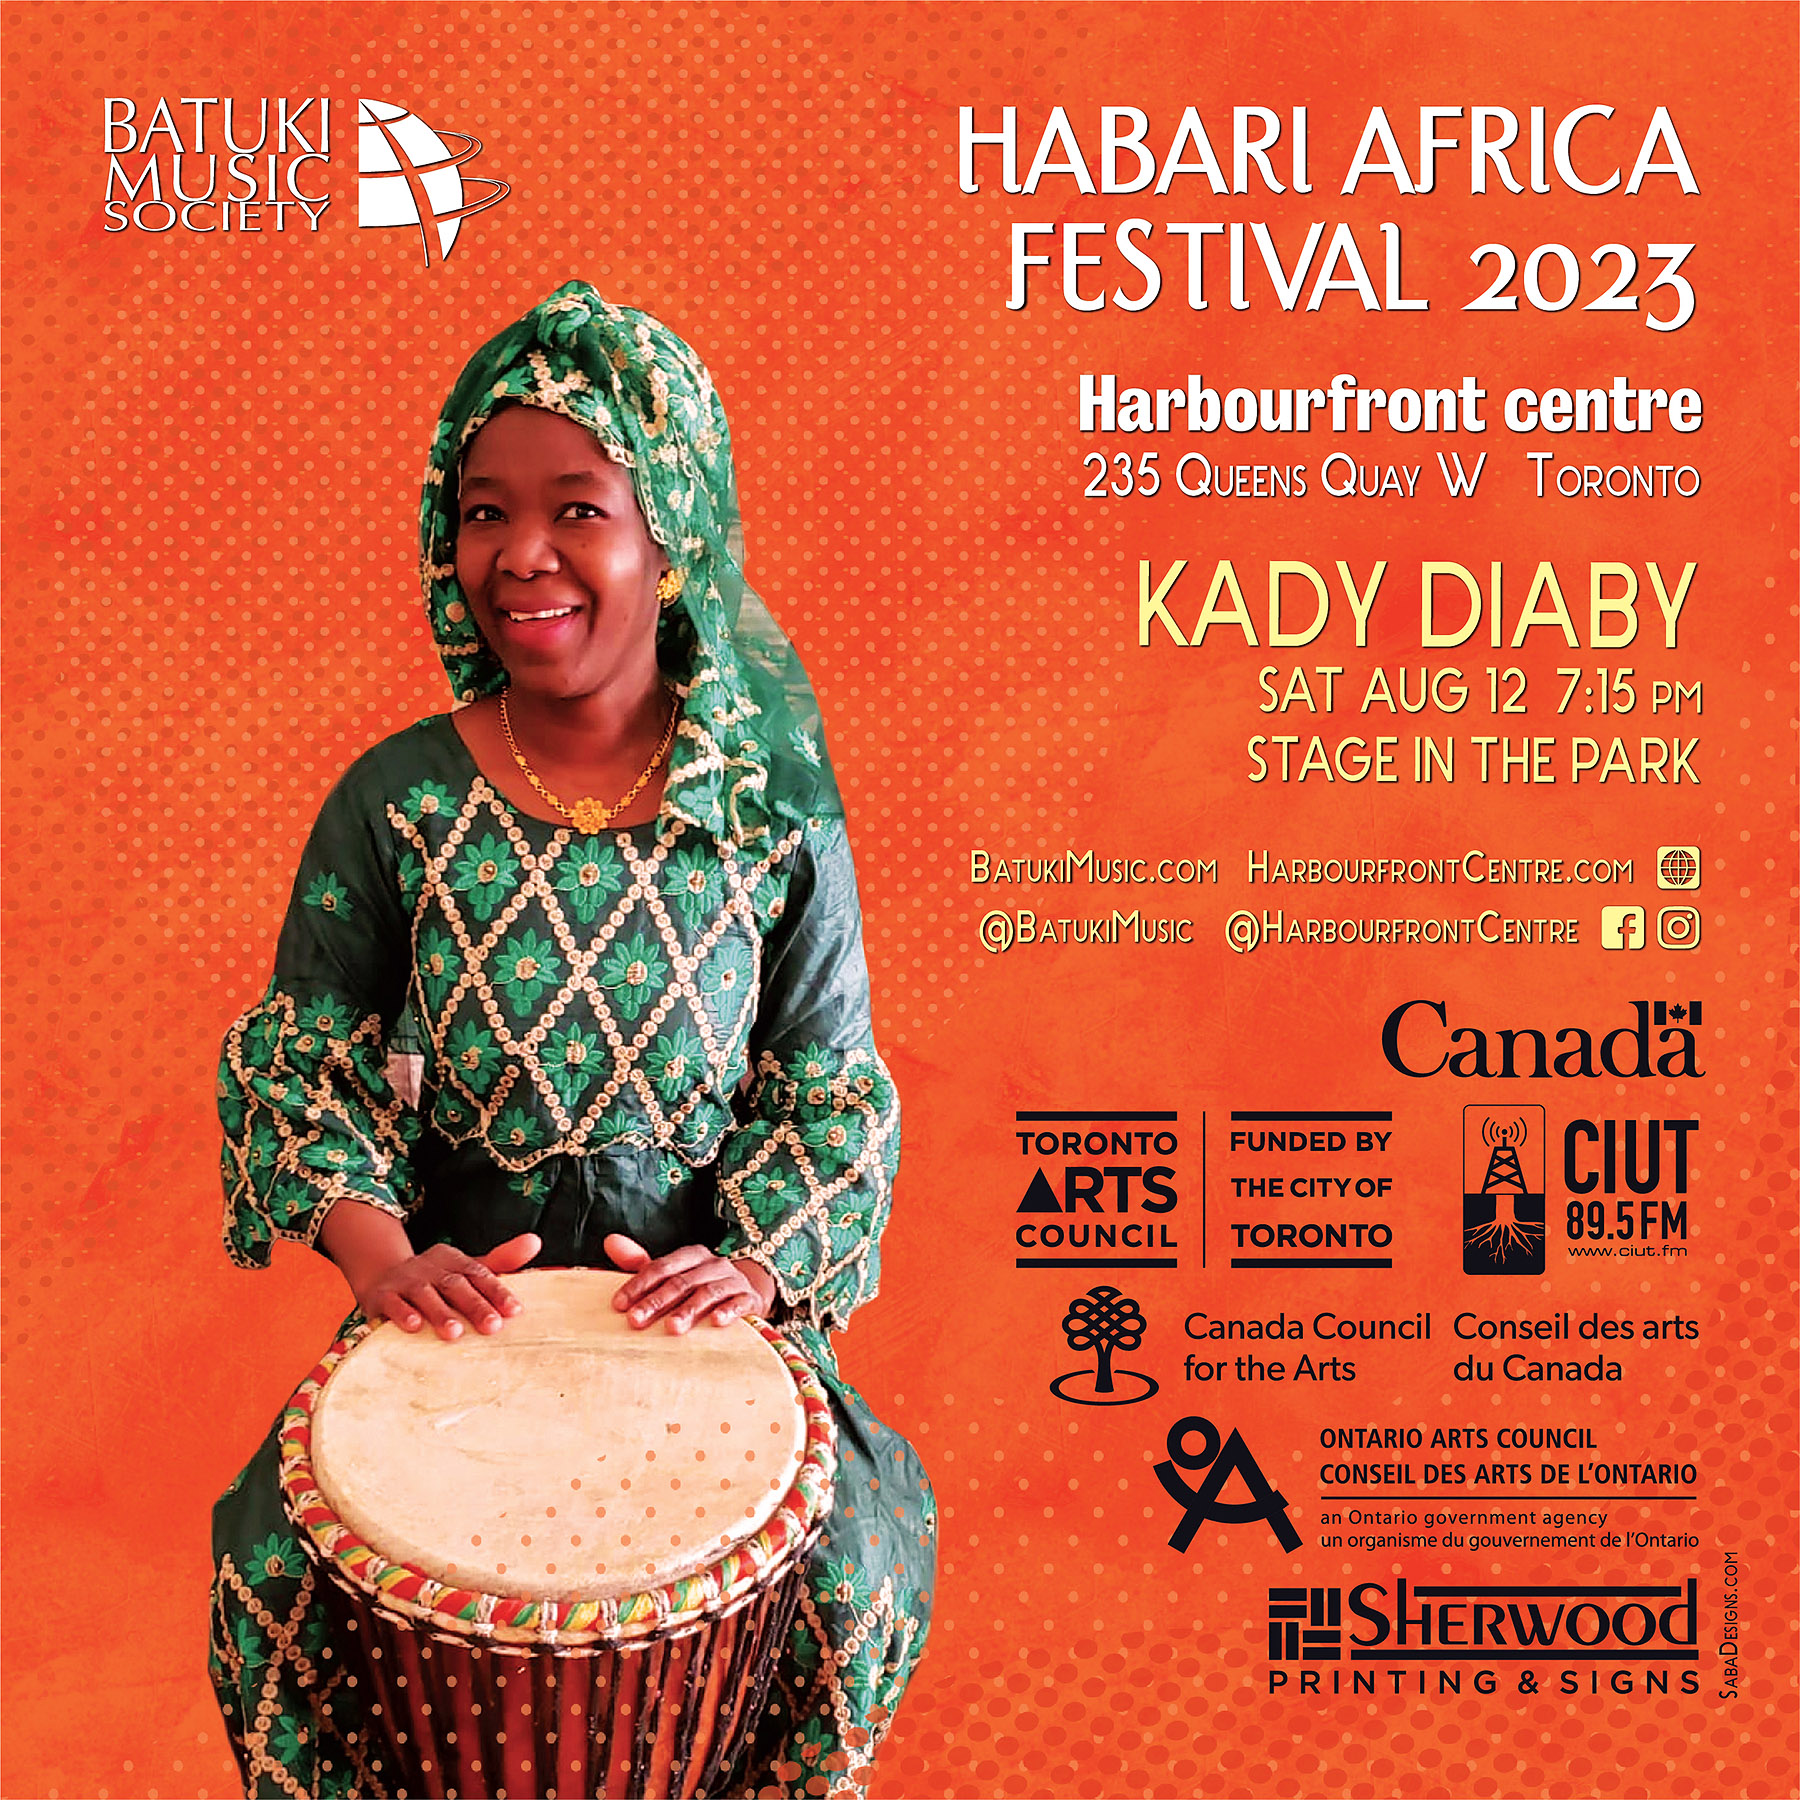 Habari Africa Live Festival 2023 by Batuki Music Society Kady Diaby